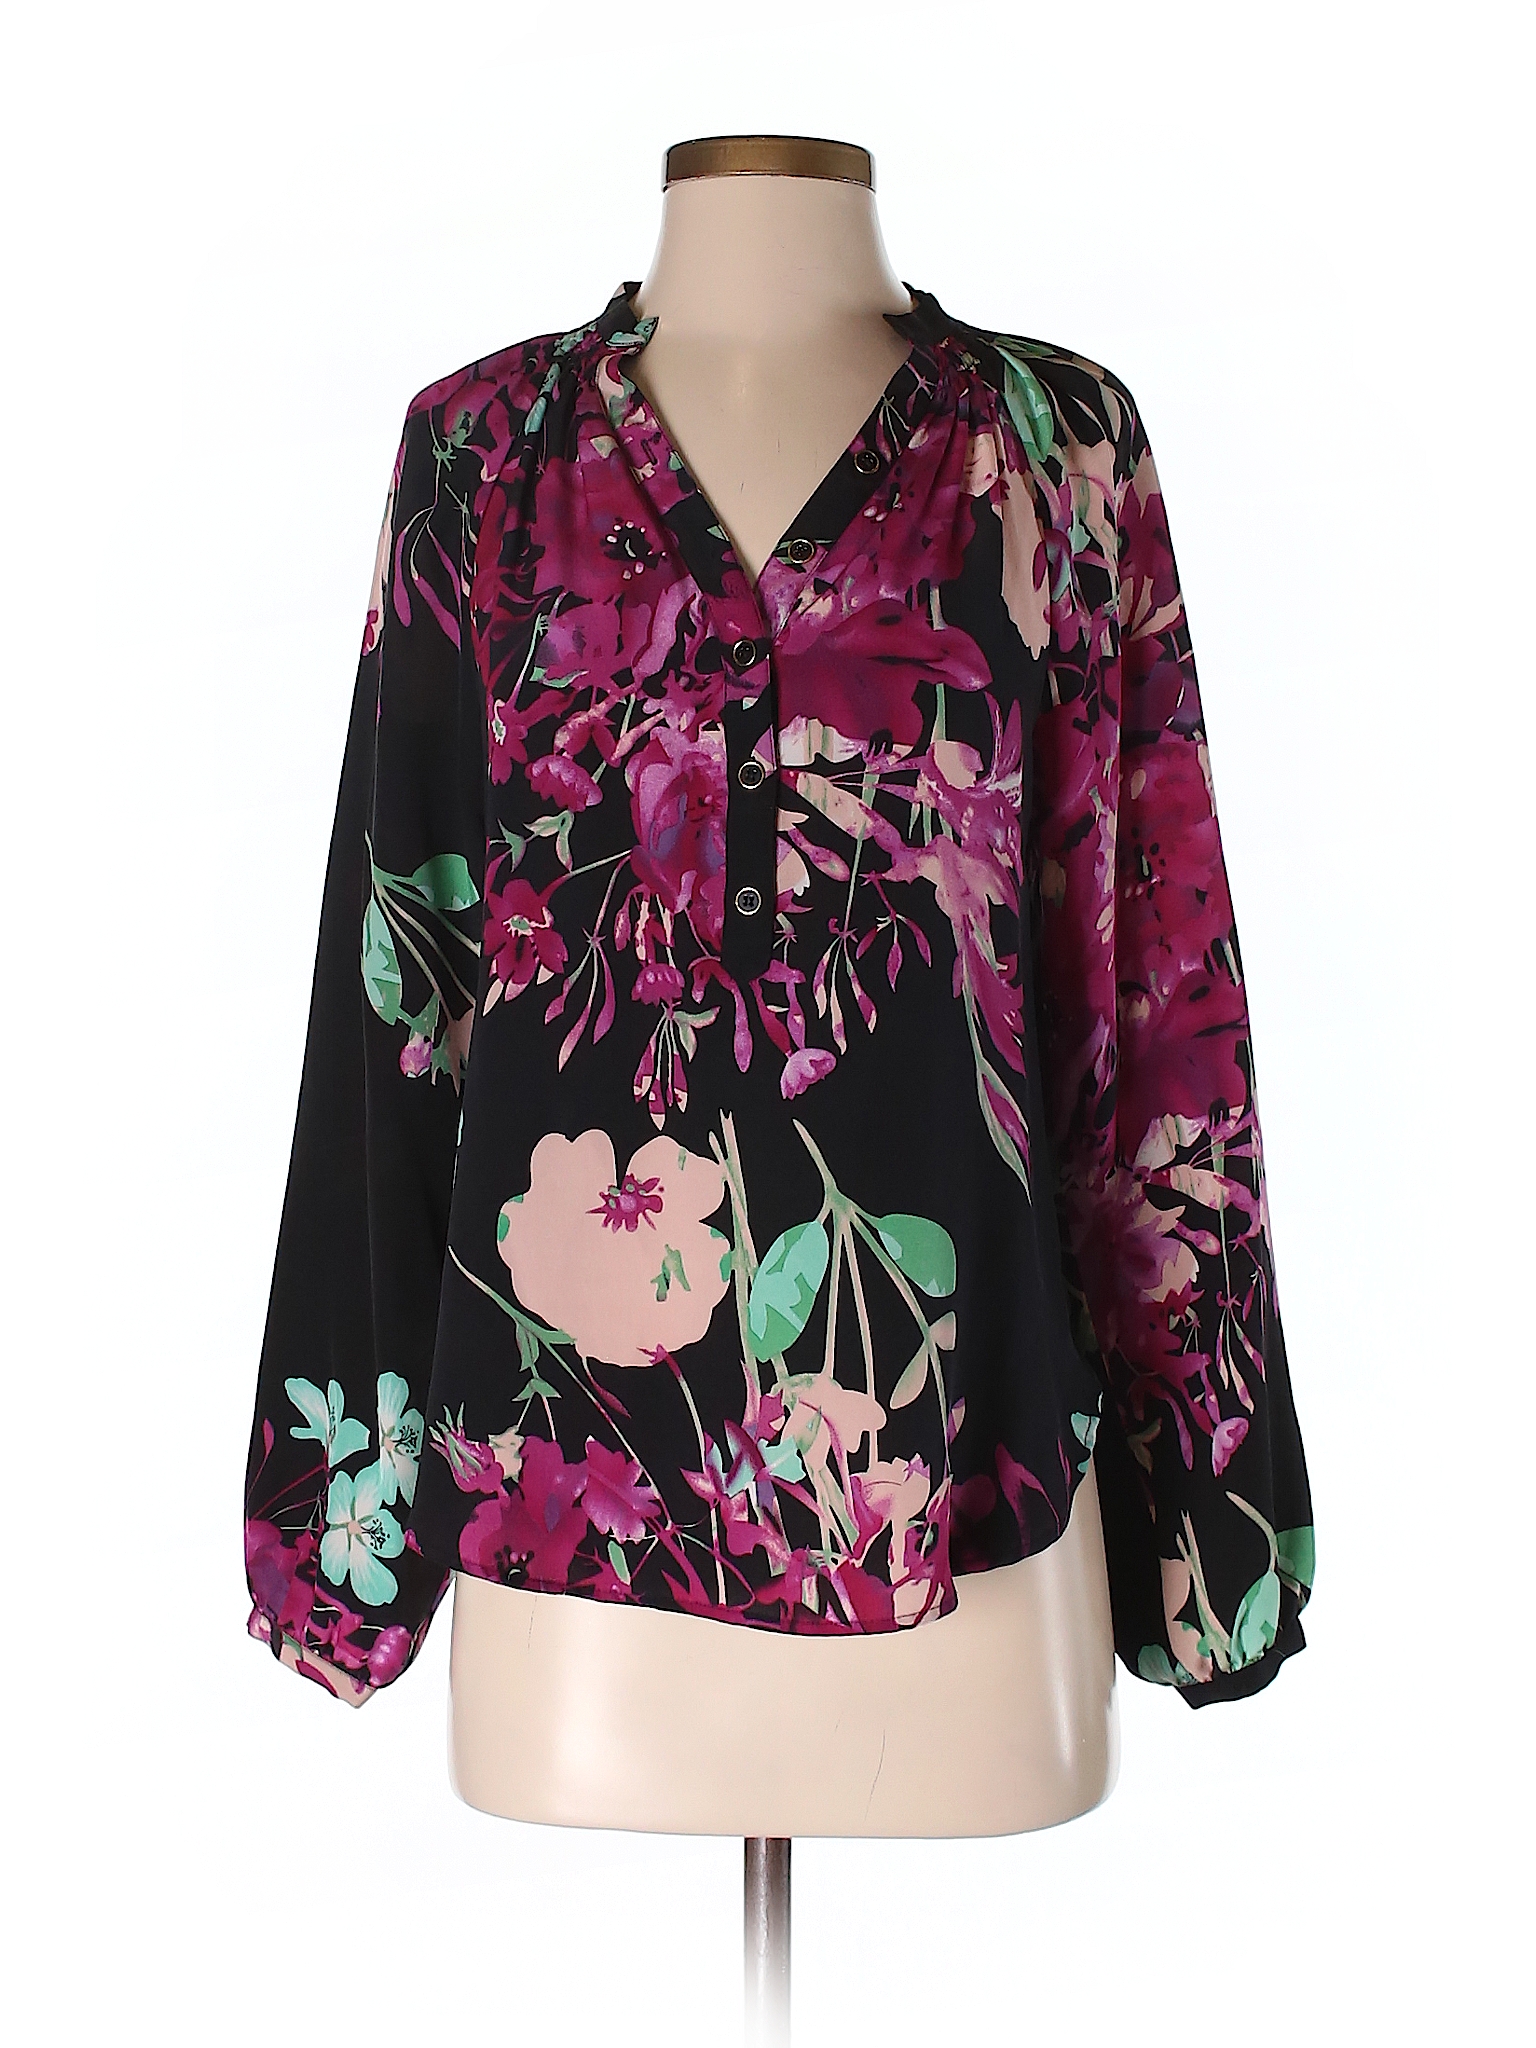 Yumi Kim 100% Silk Floral Black Long Sleeve Silk Top Size XS - 81% off ...